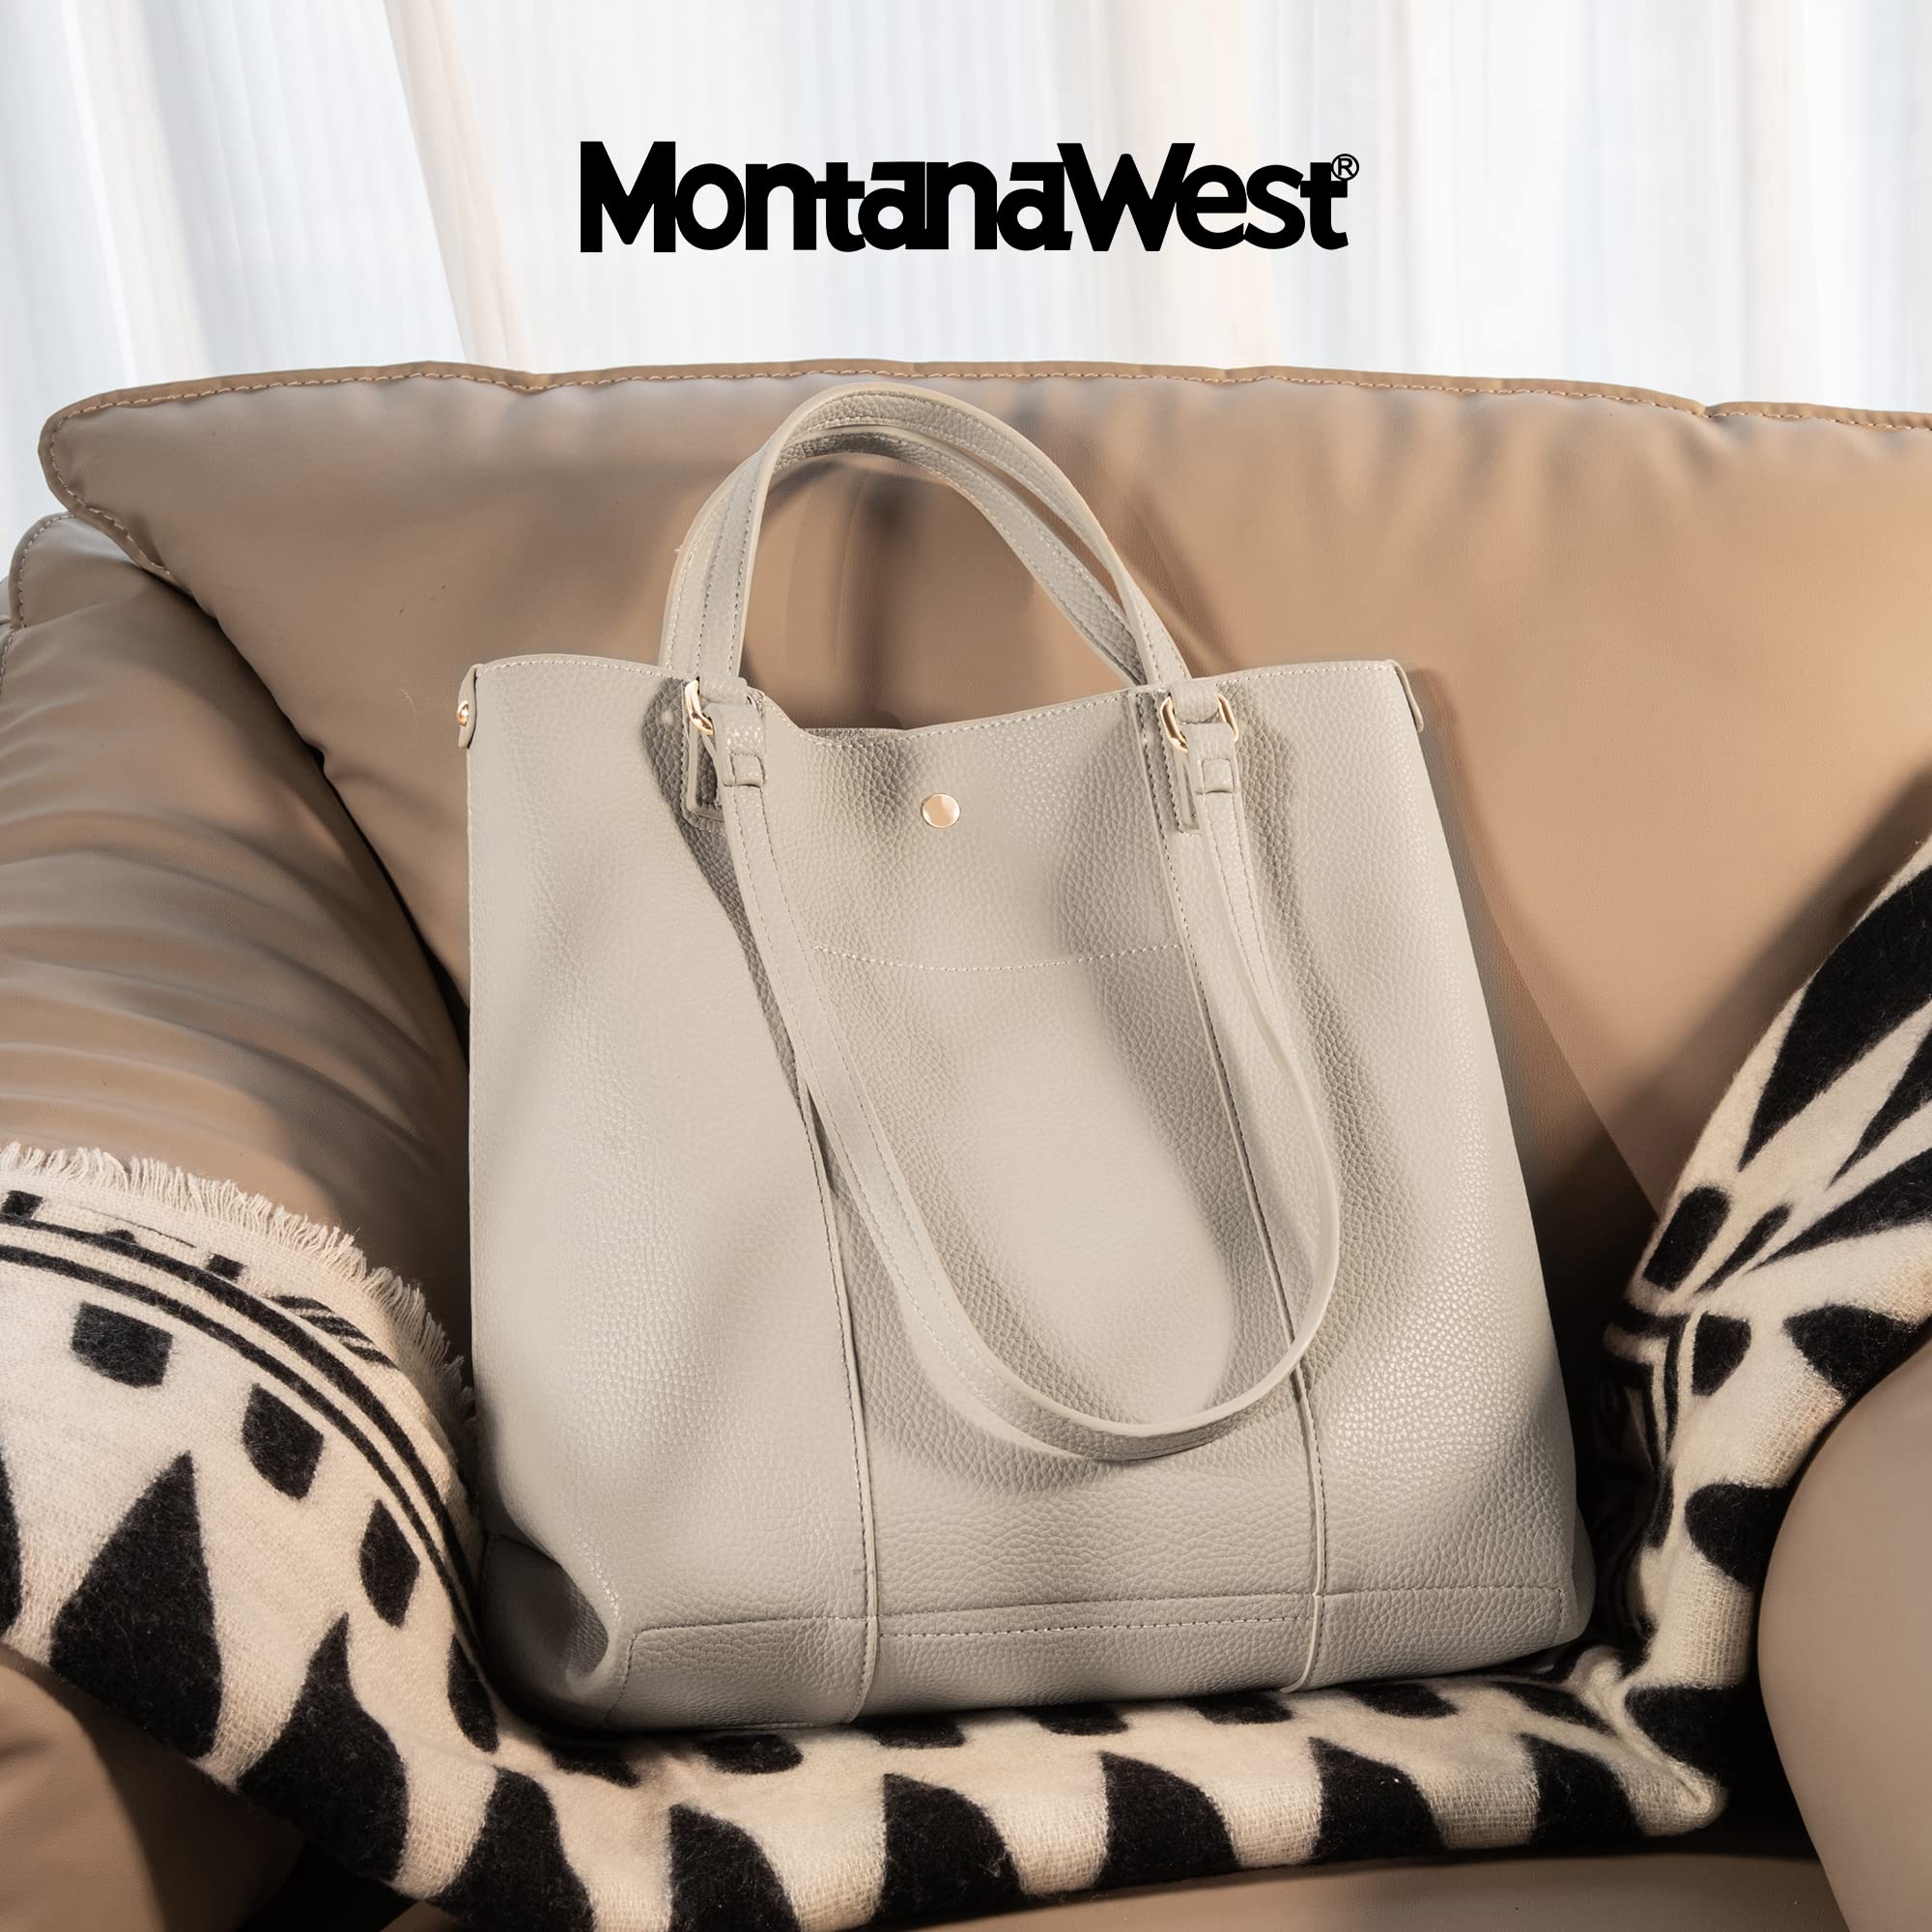 Montana West Tote Bag for Women Purses and Handbags Top Handle Satchel Purse Large Shoulder Handbag